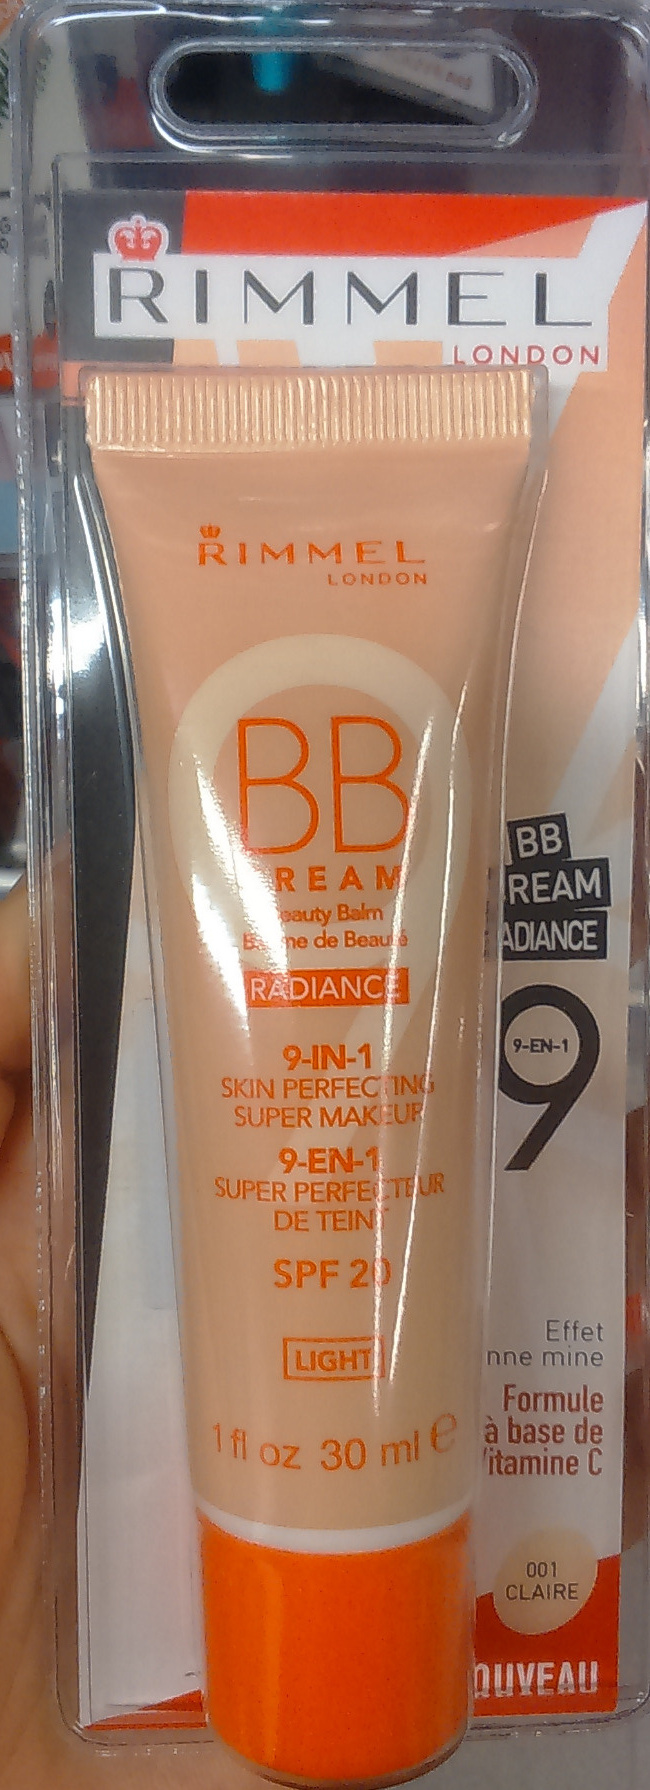 BB cream radiance 9 en 1 SPF 20 - 001 claire - Produto - fr